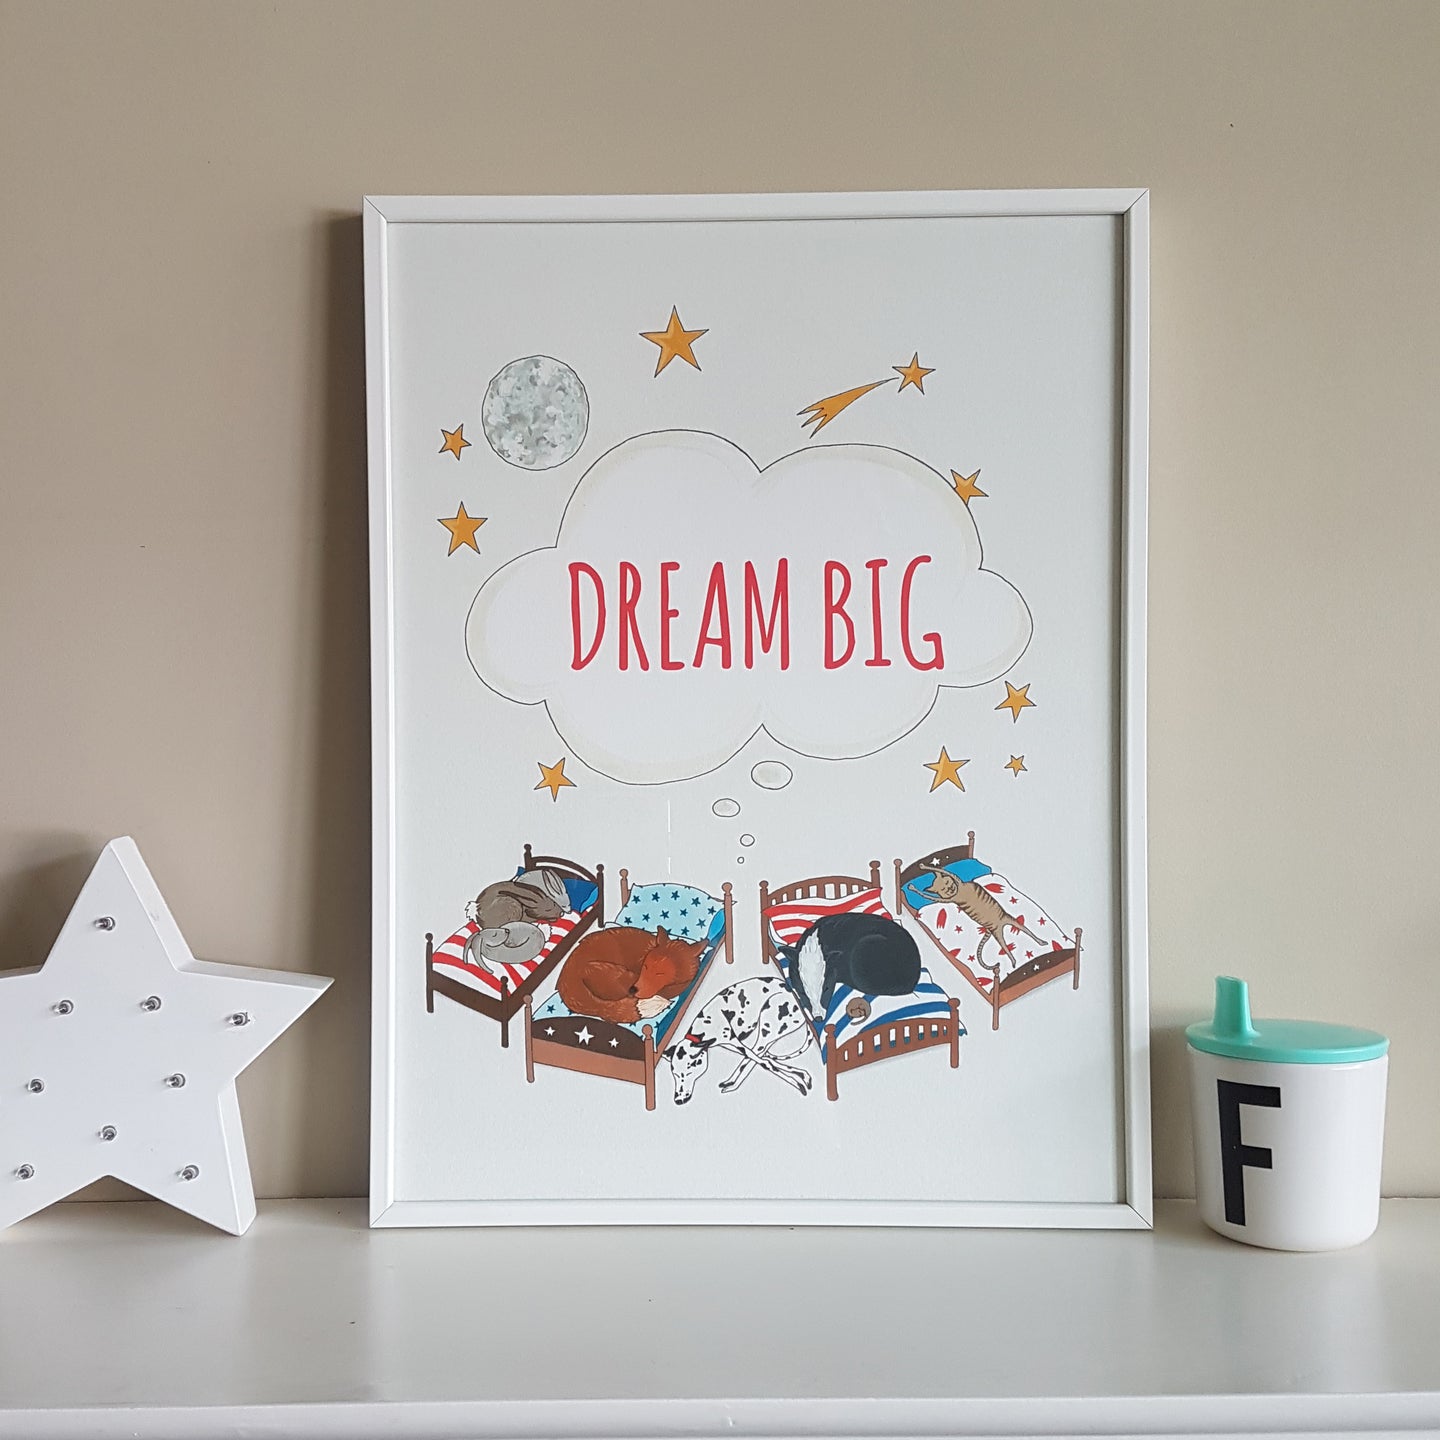 Charming hand illustrated Dream Big animal print for the nursery